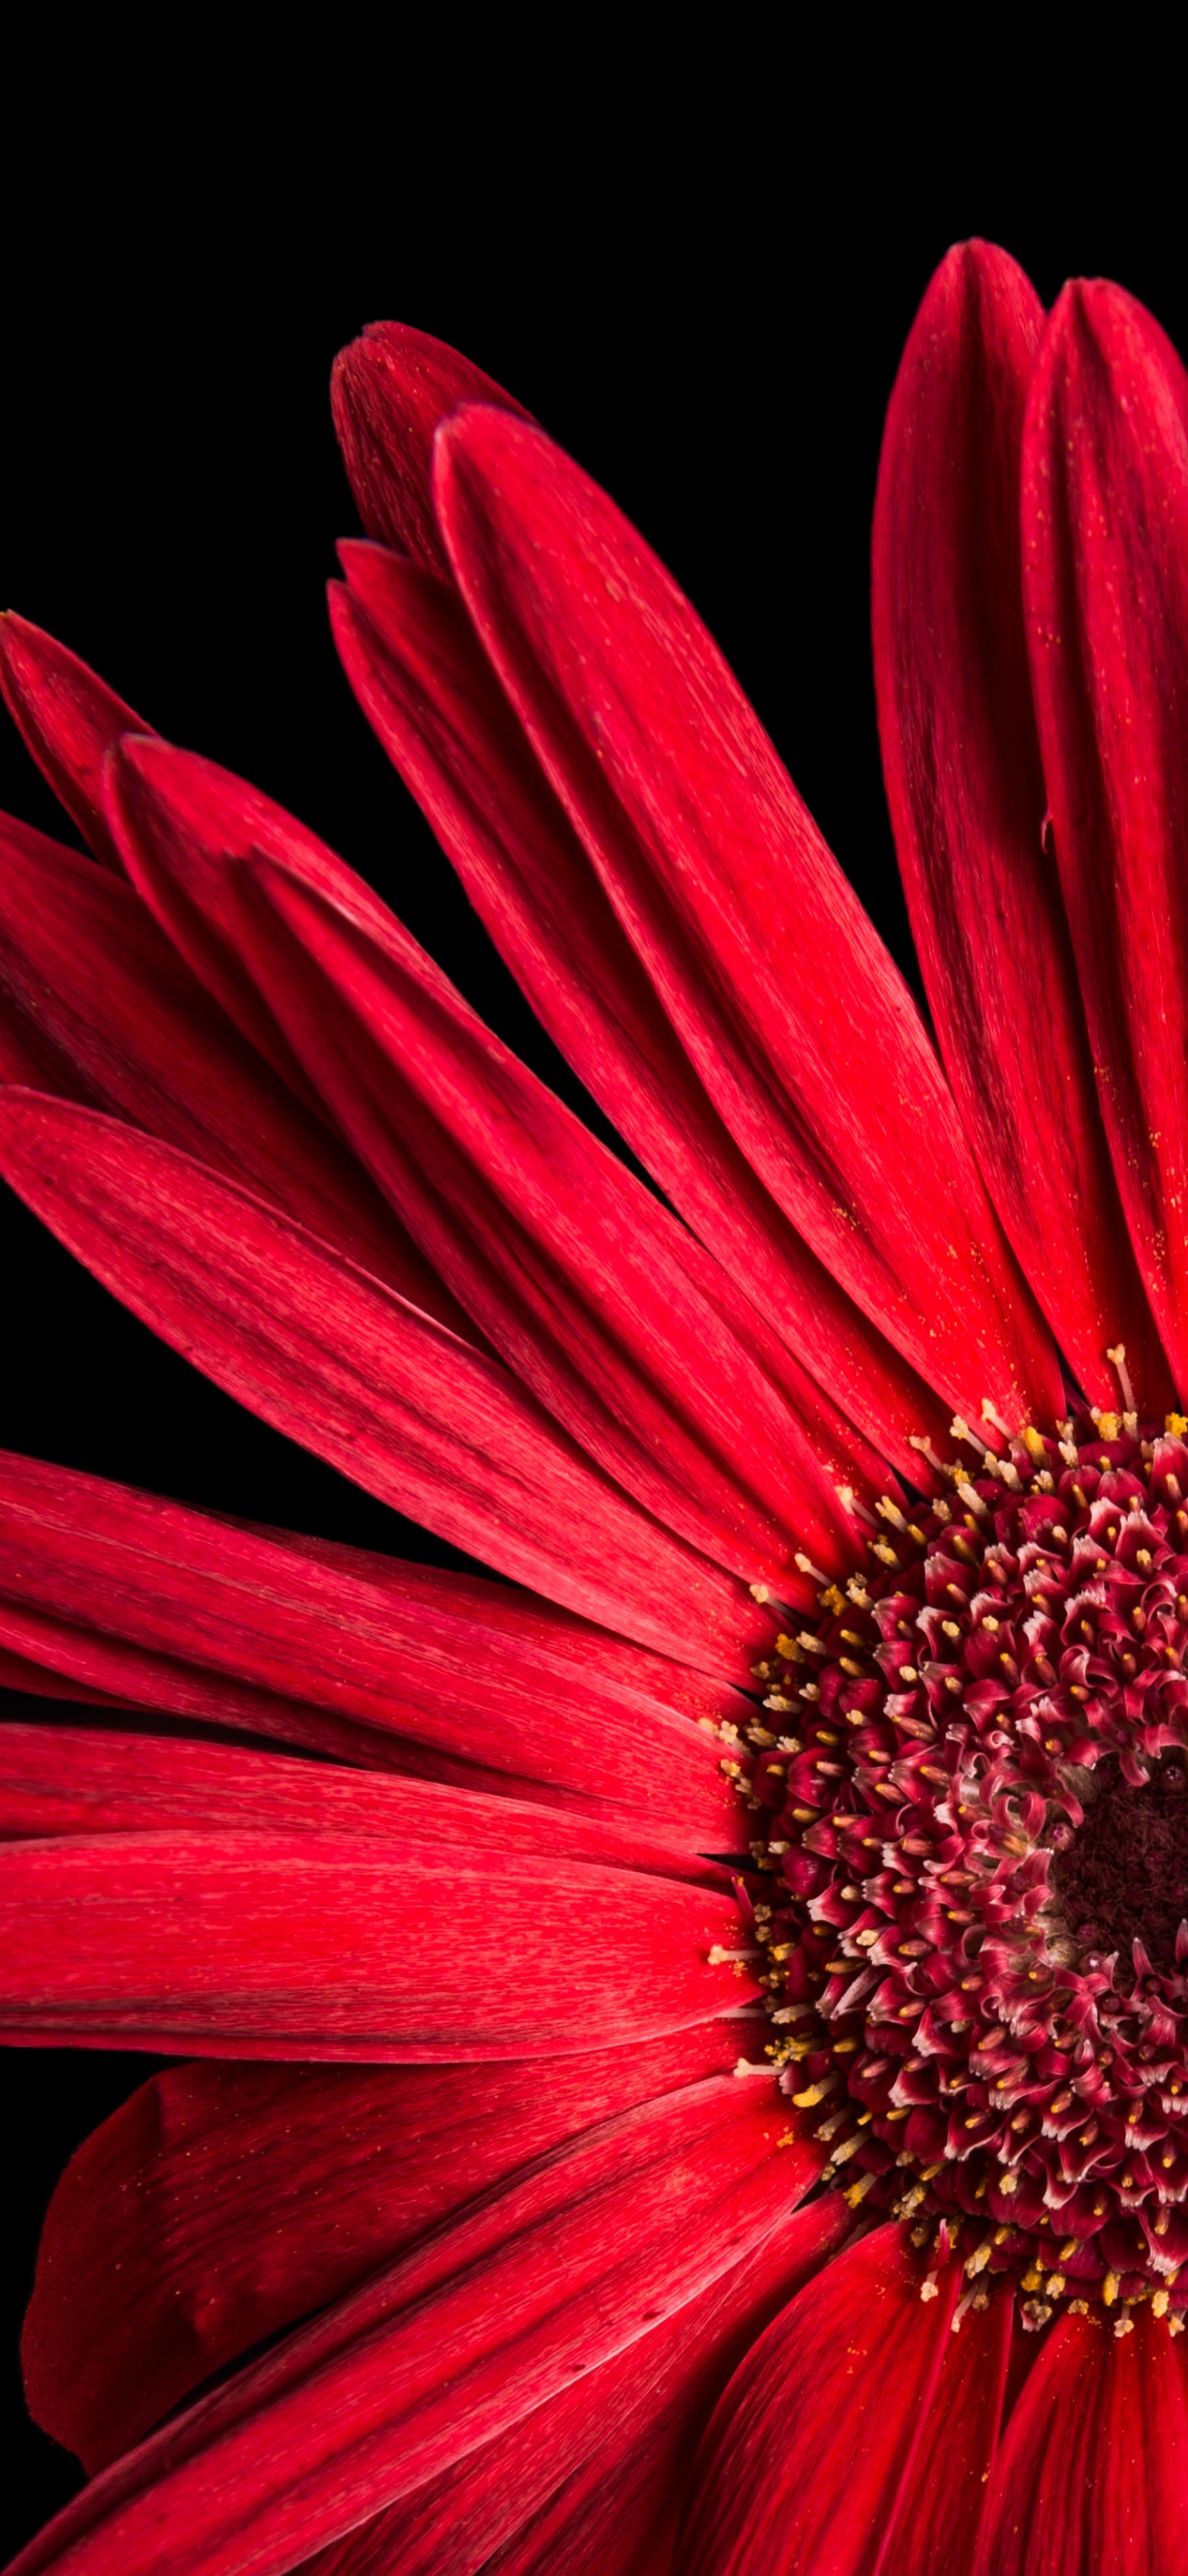 flower daisy red